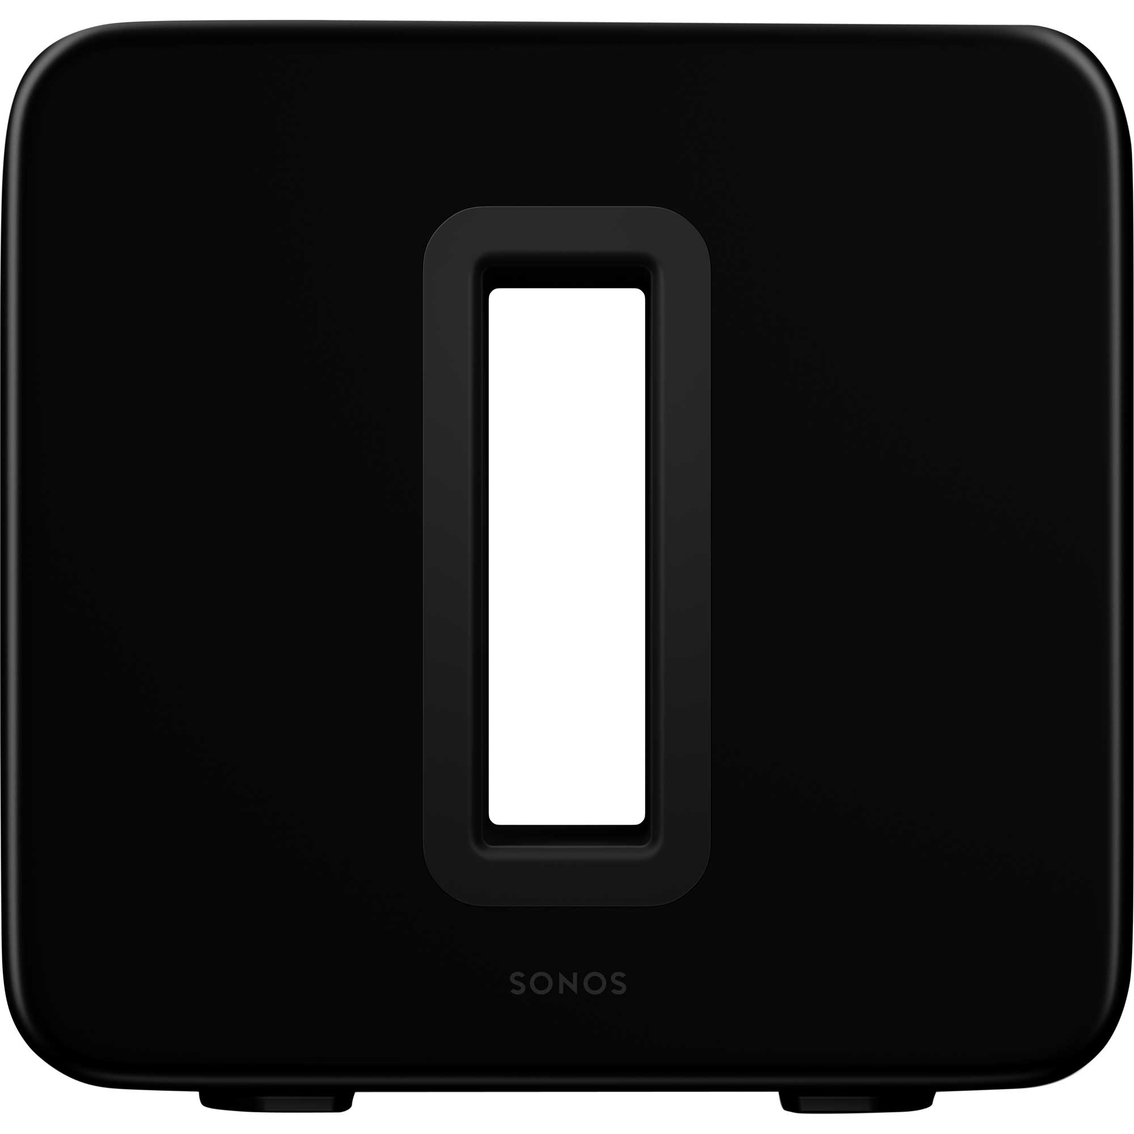 Sonos Sub Wireless Subwoofer - Image 1 of 8